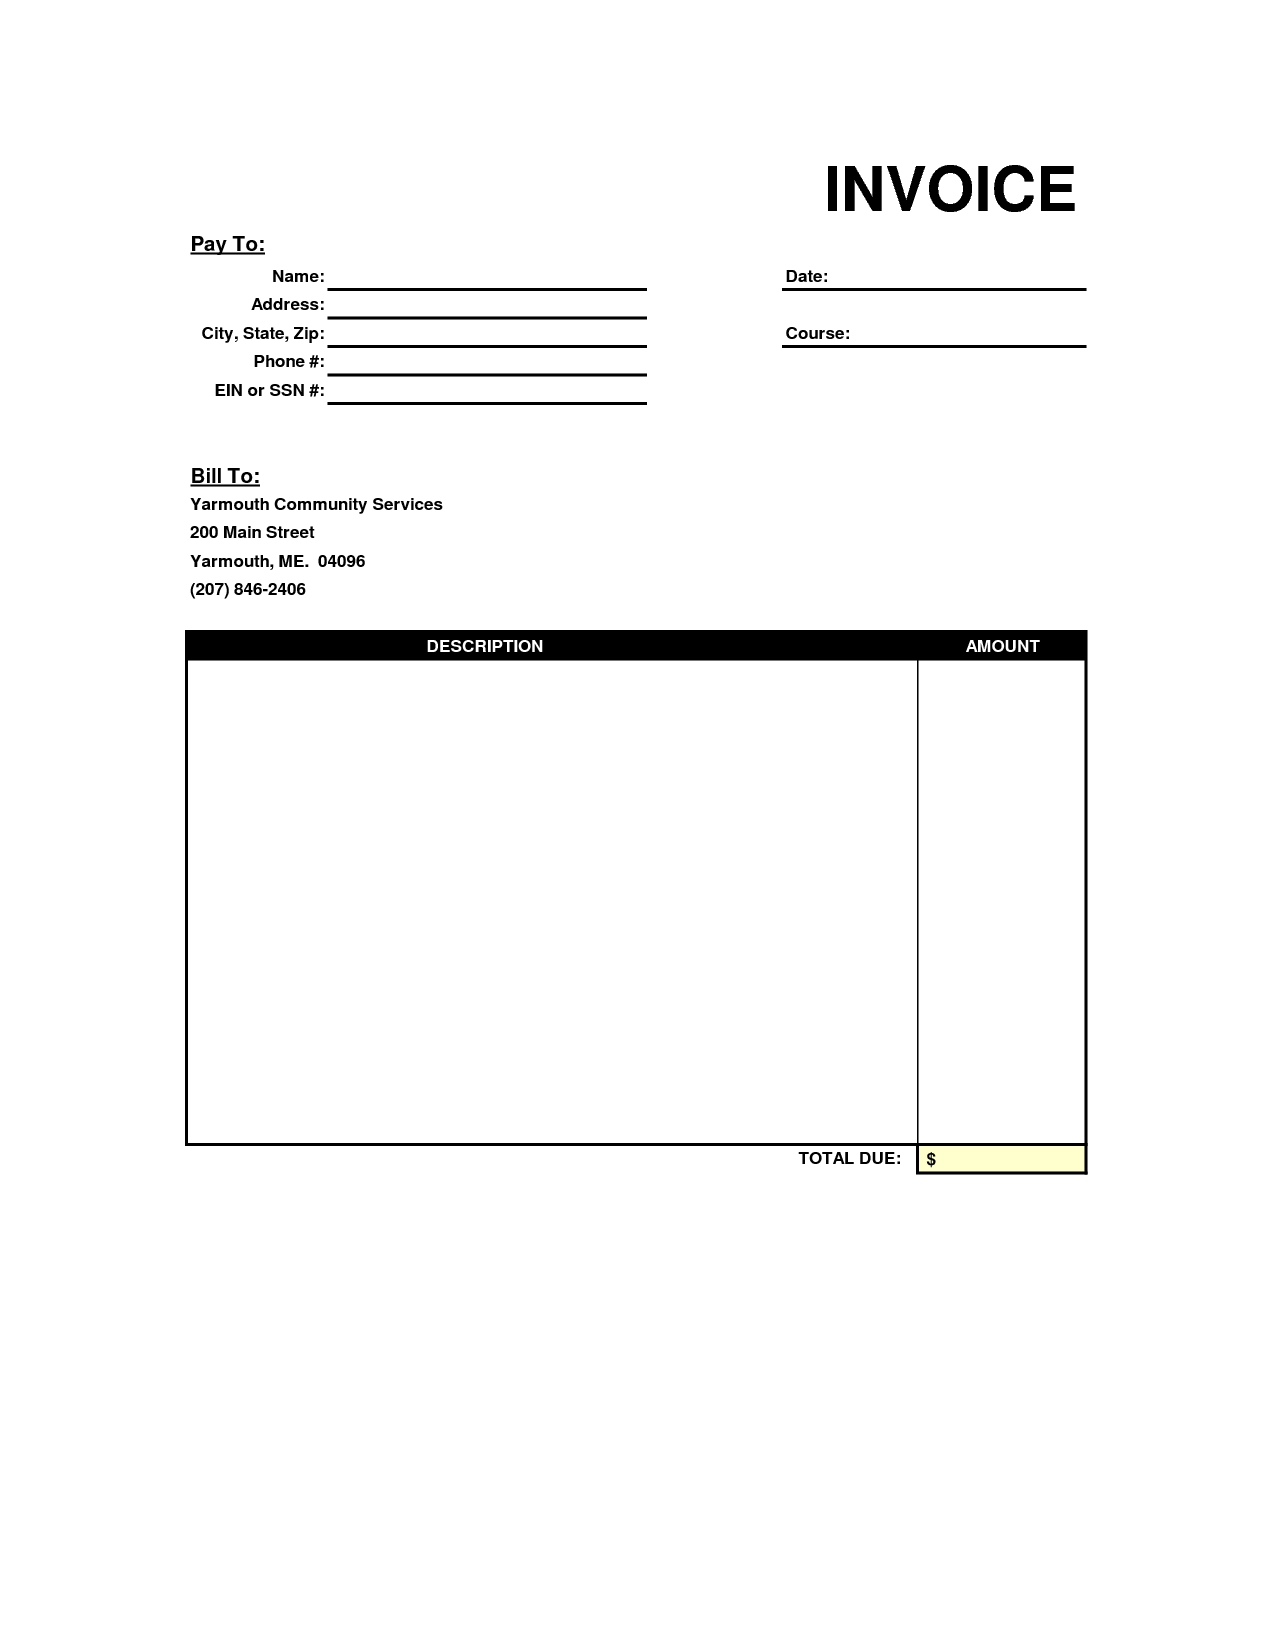 blank invoice sample residers blank invoice document